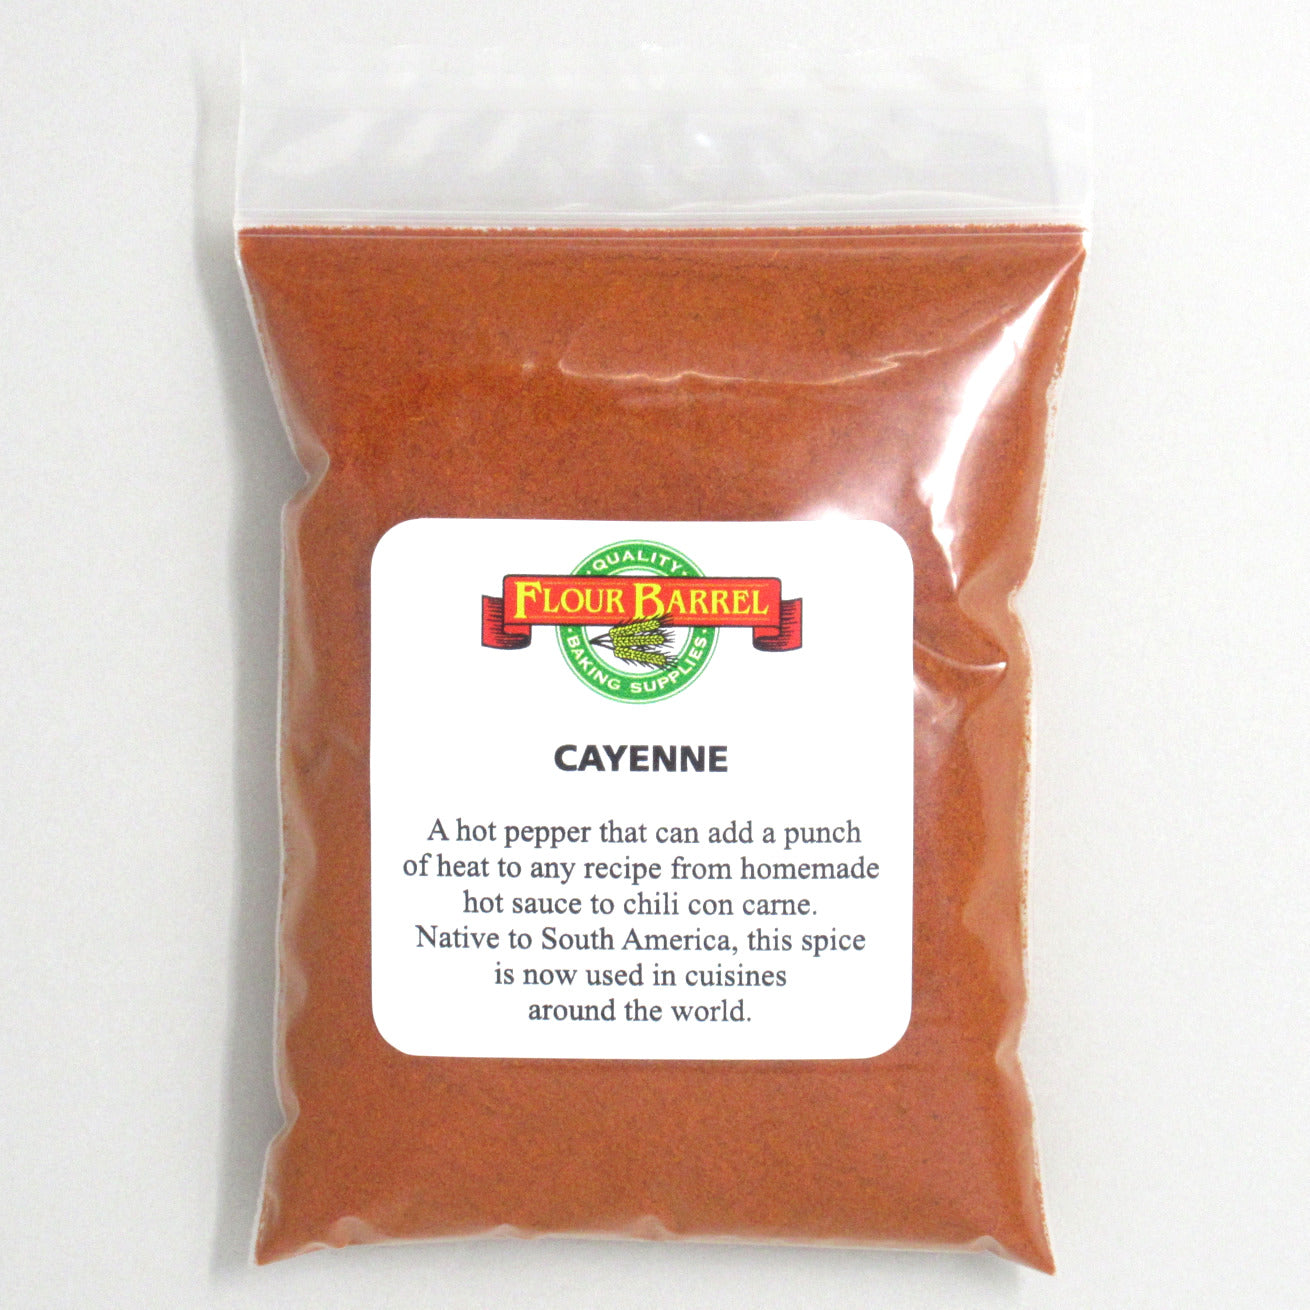 Flour Barrel product image - Cayenne